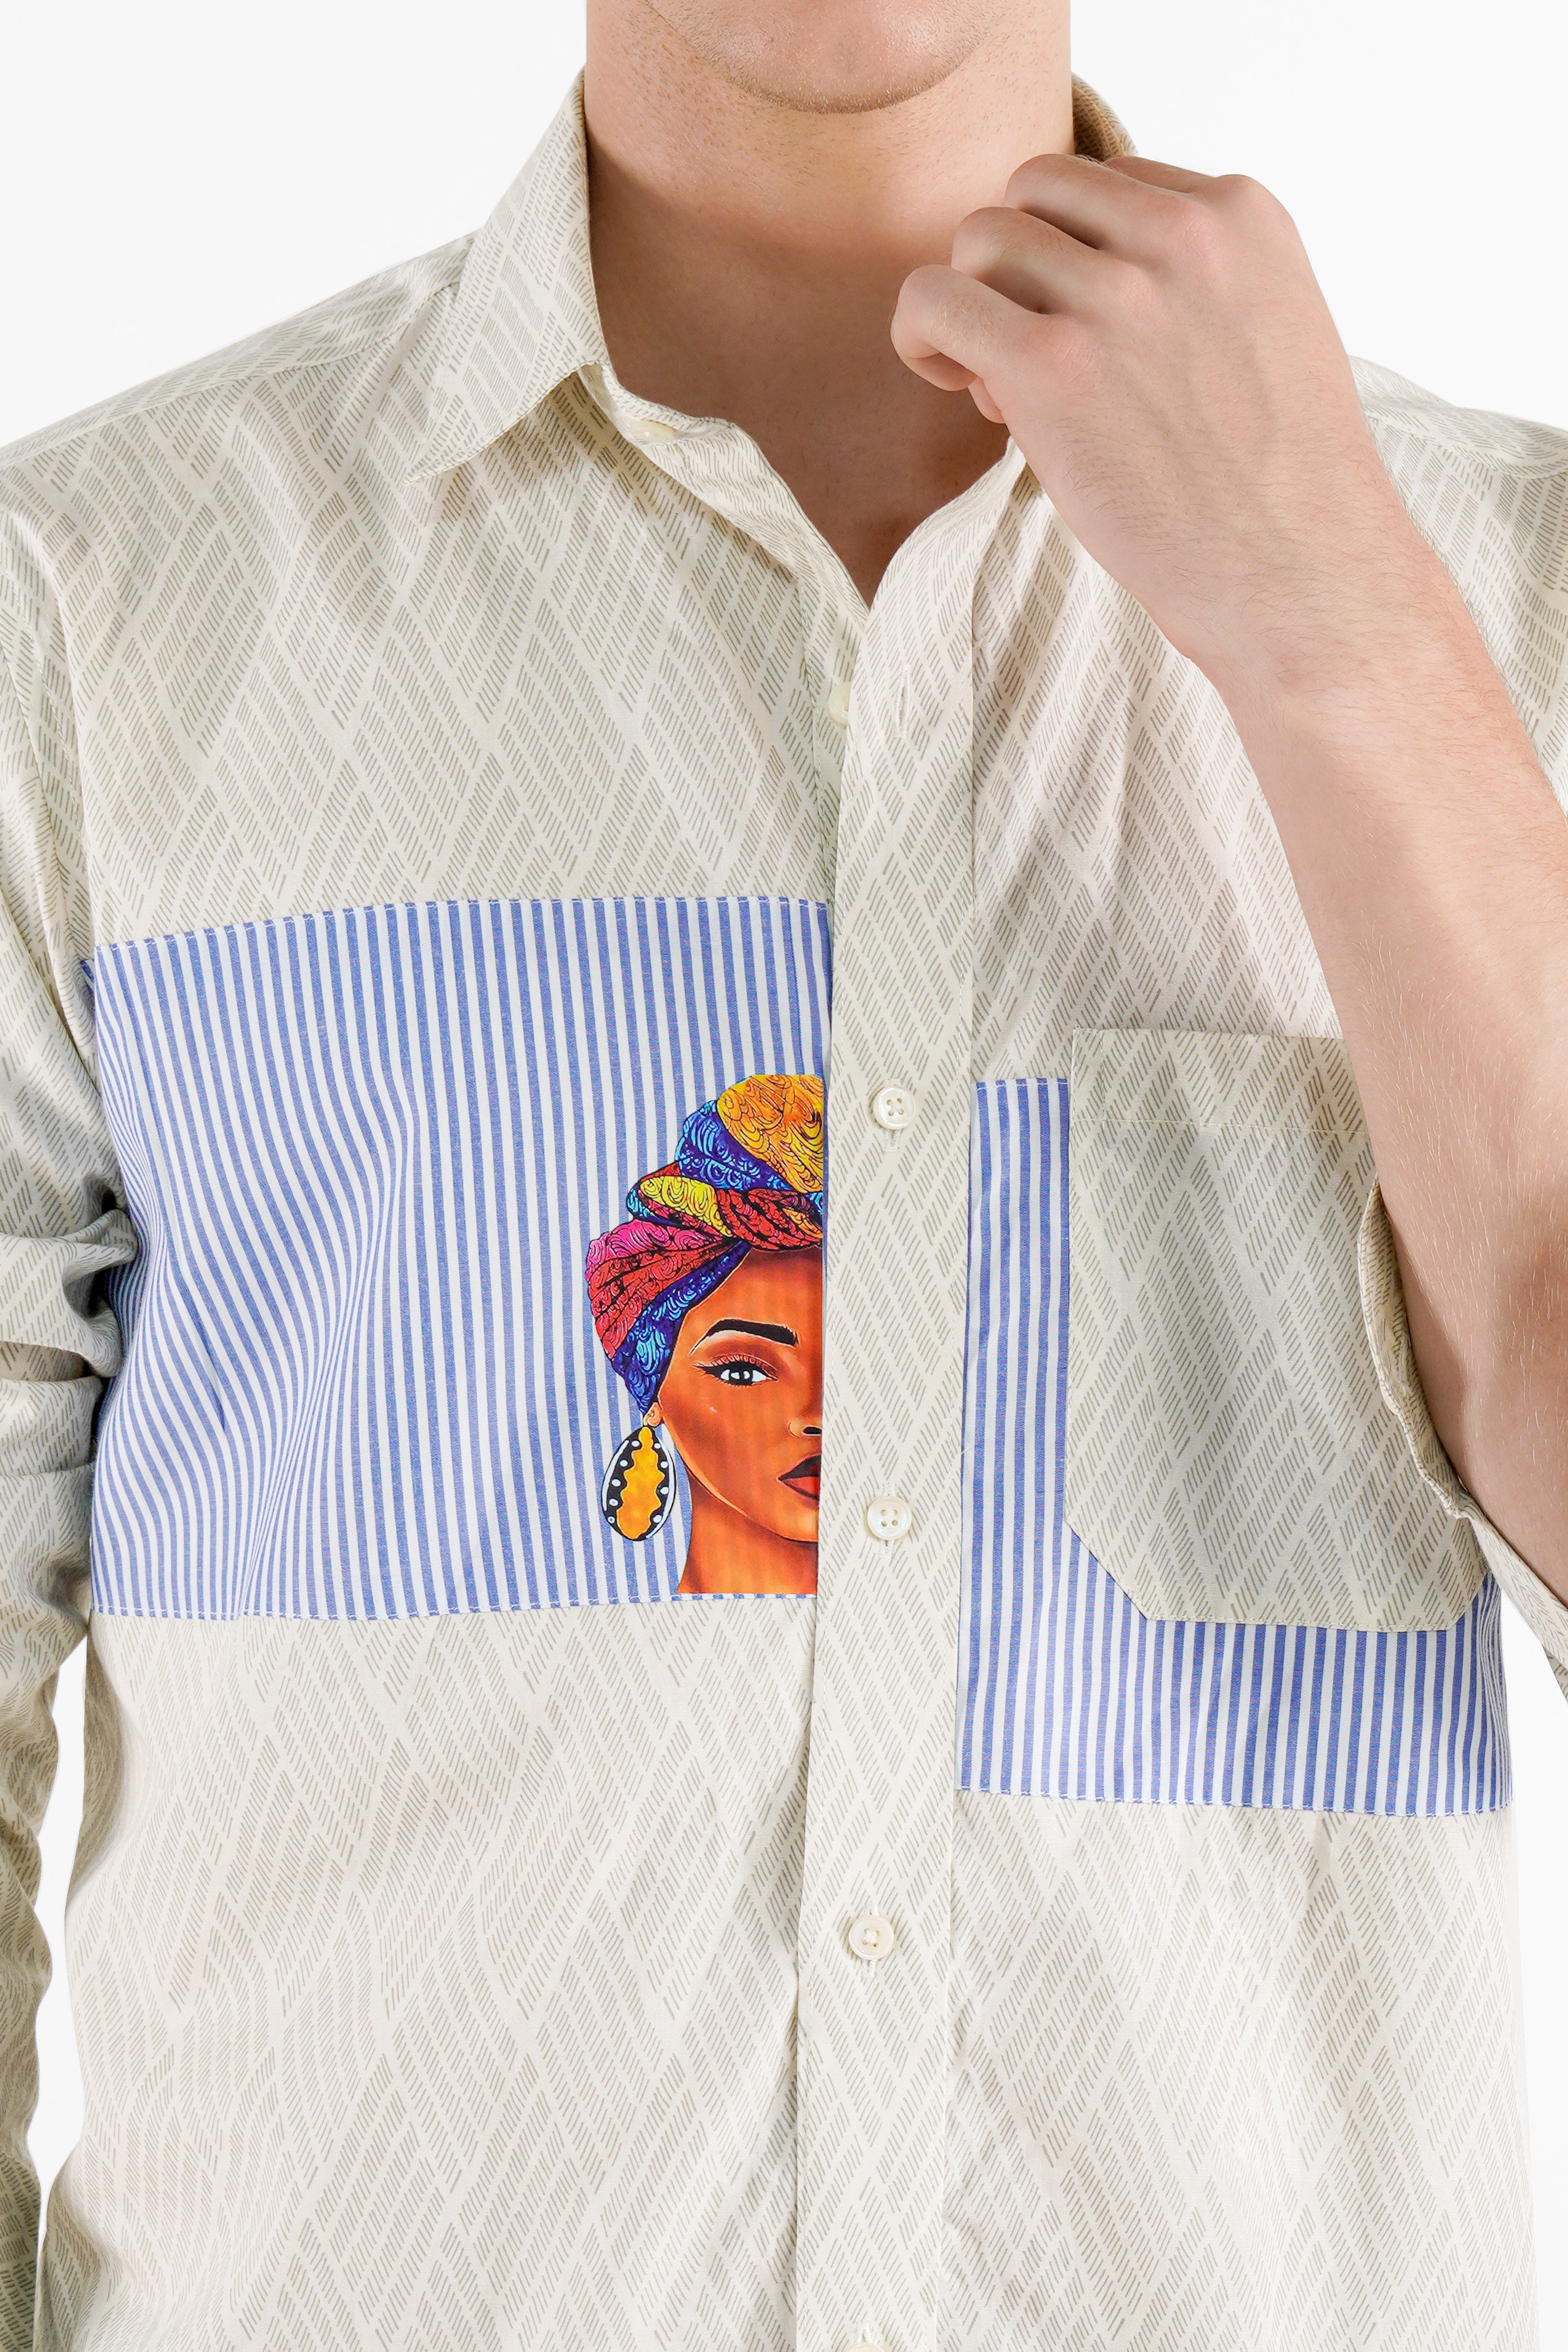 Cararra Brown with Yonder Blue Striped Funky Printed Premium Cotton Designer Shirt